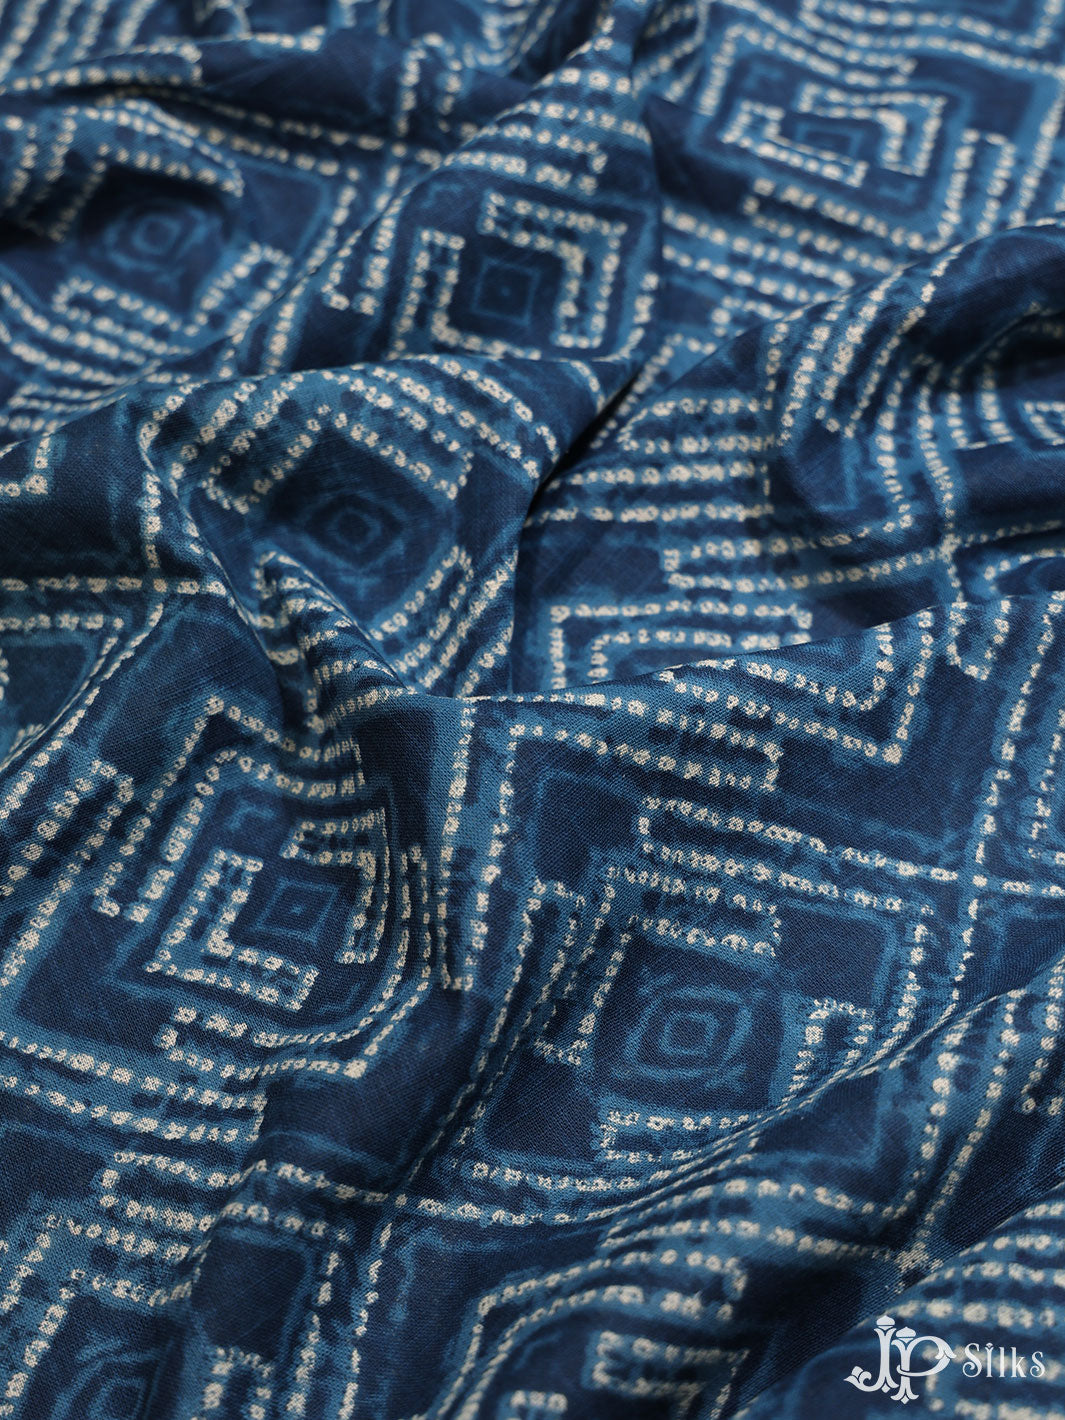 Indigo Blue Digital Printed Cotton Fabric - D1771